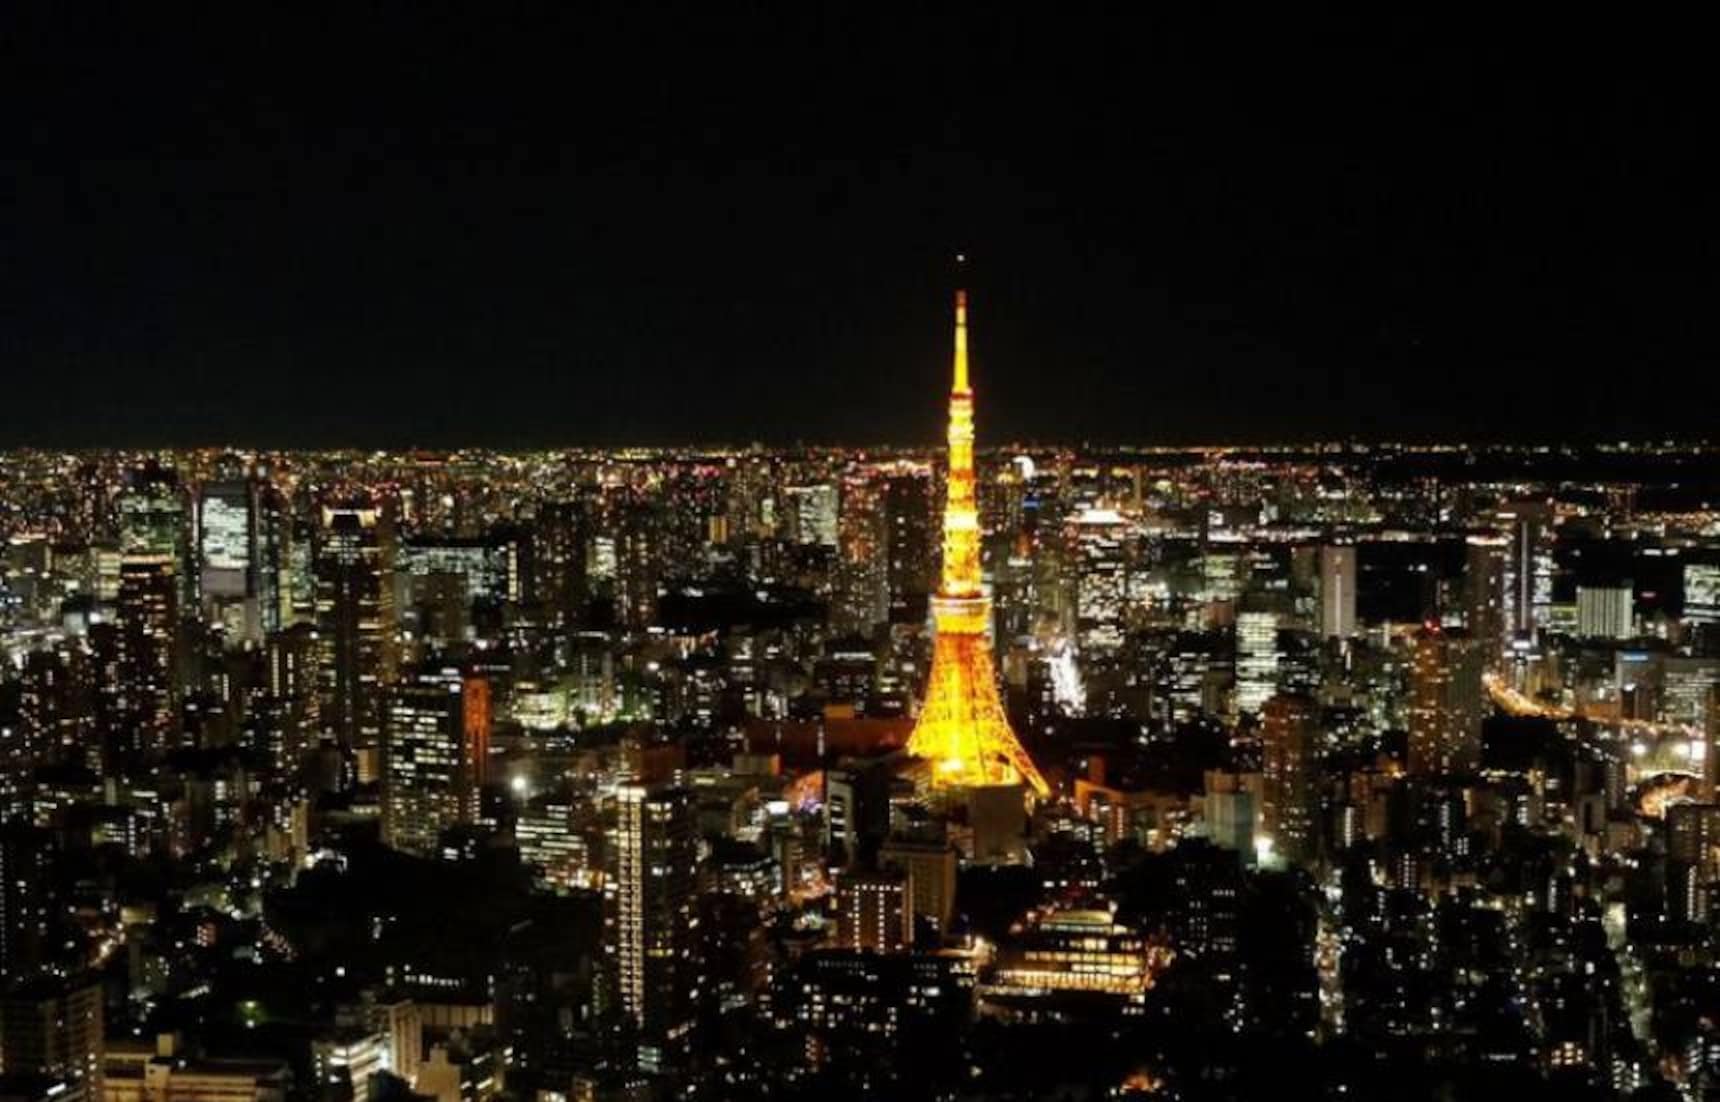 20 Absolutely Romantic Date Spots in Tokyo